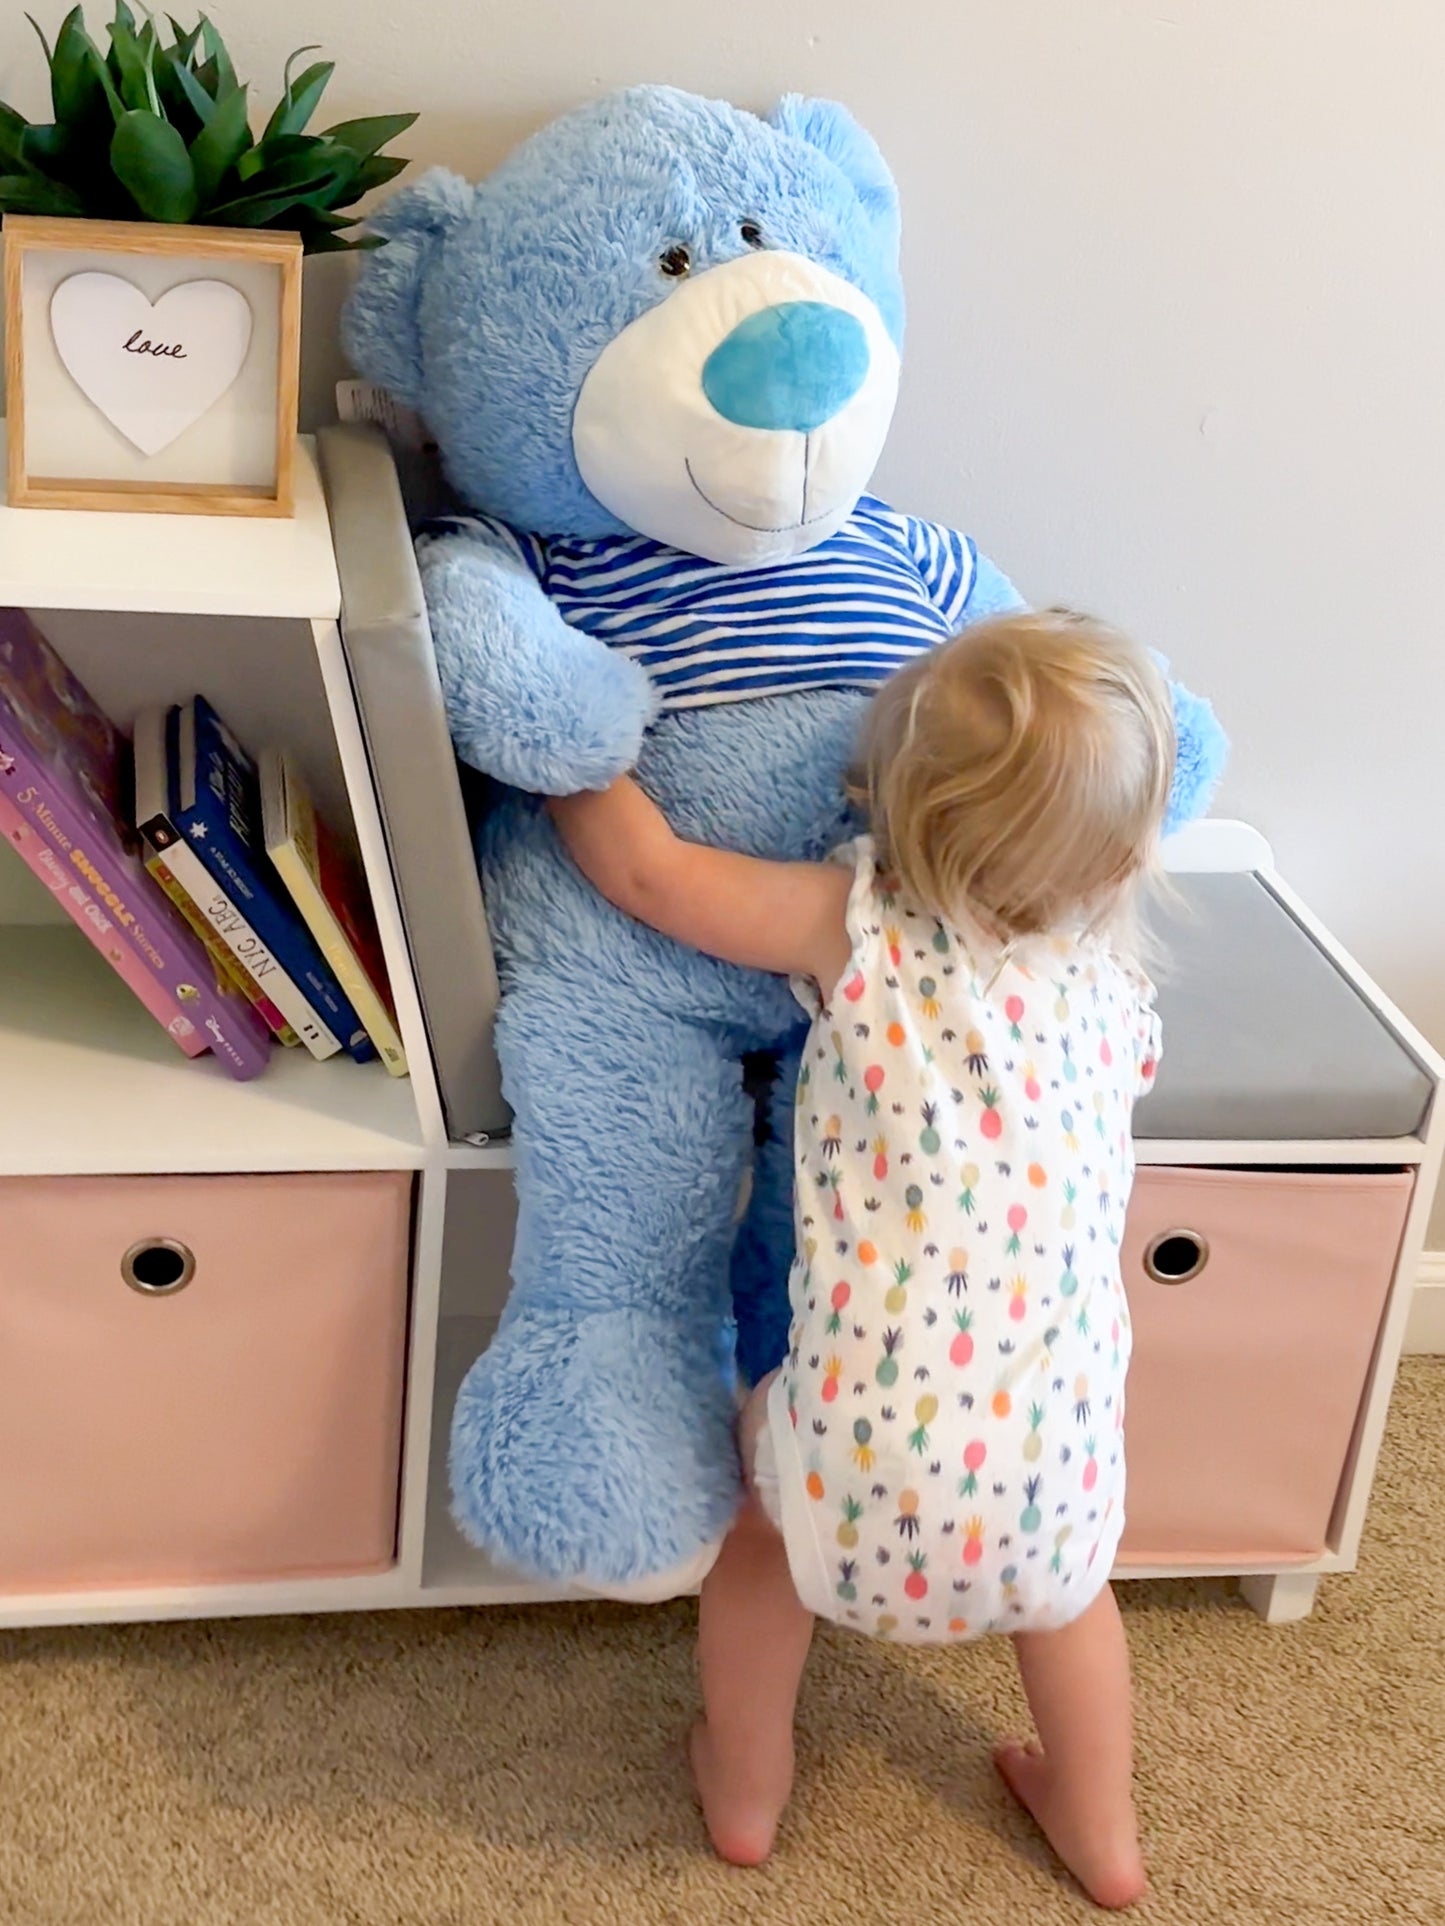 Giant Teddy Bear Plush Toy, Blue/Beige, 36 Inches - MorisMos Stuffed Animals